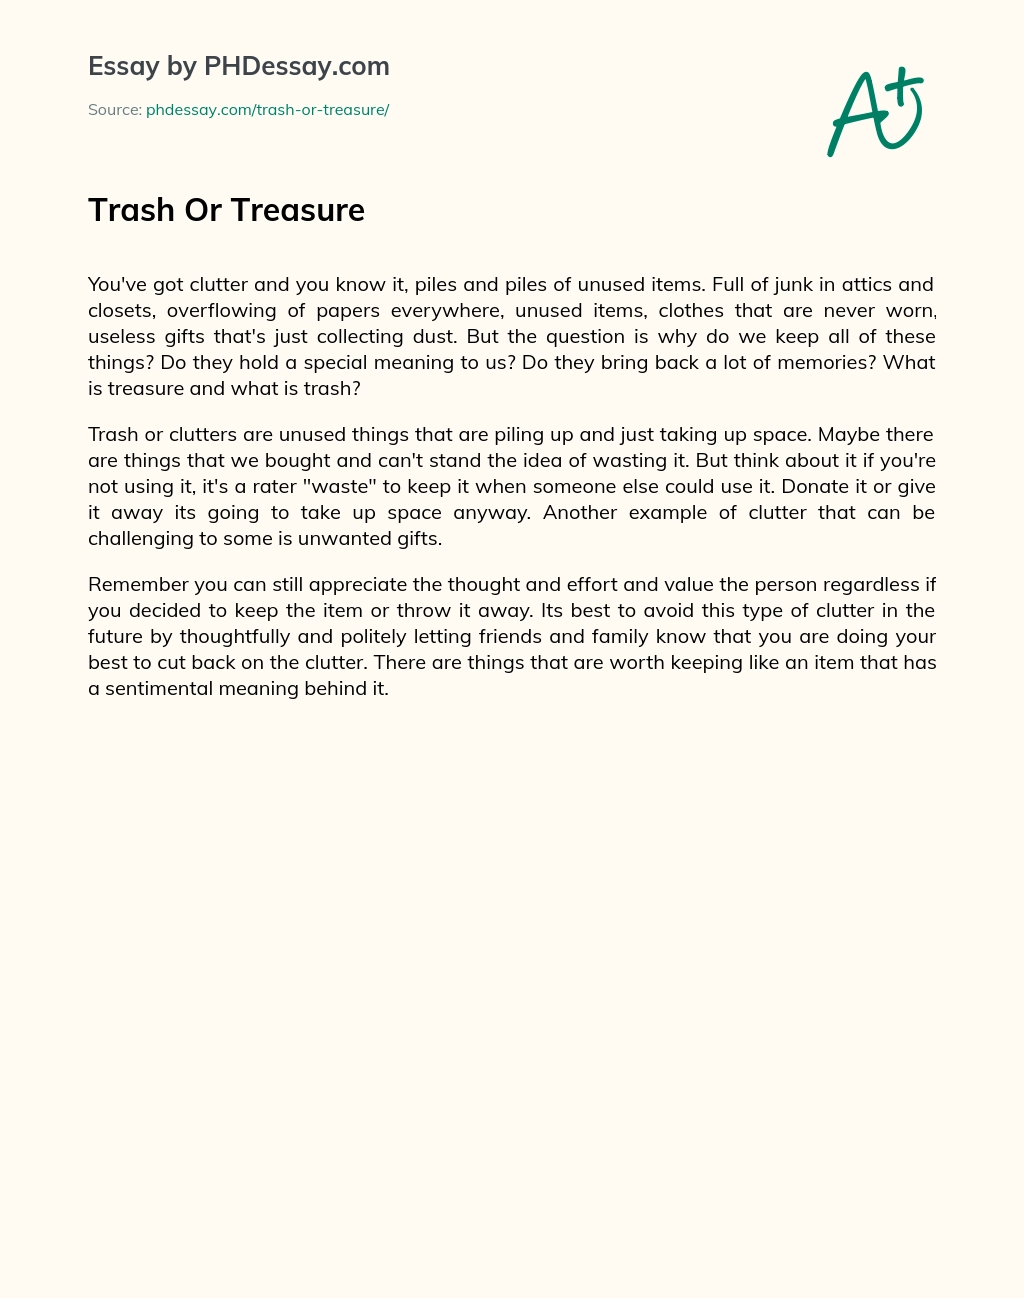 Trash Or Treasure essay